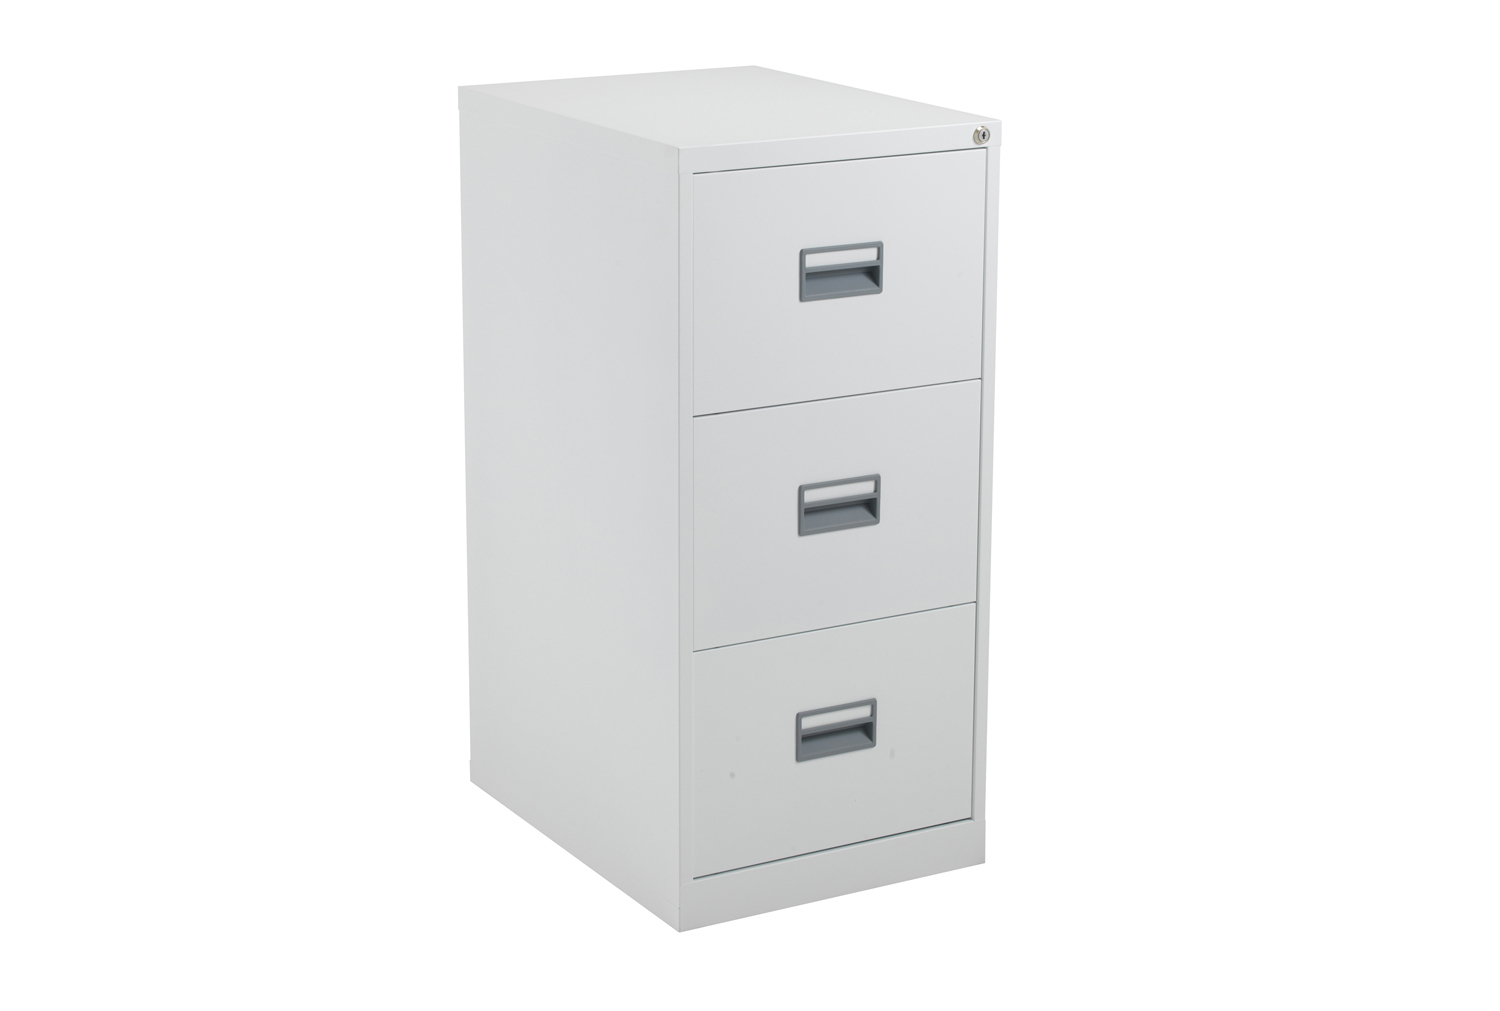 Value Line Metal Filing Cabinet, 3 Drawer - 47wx62dx100h (cm), White